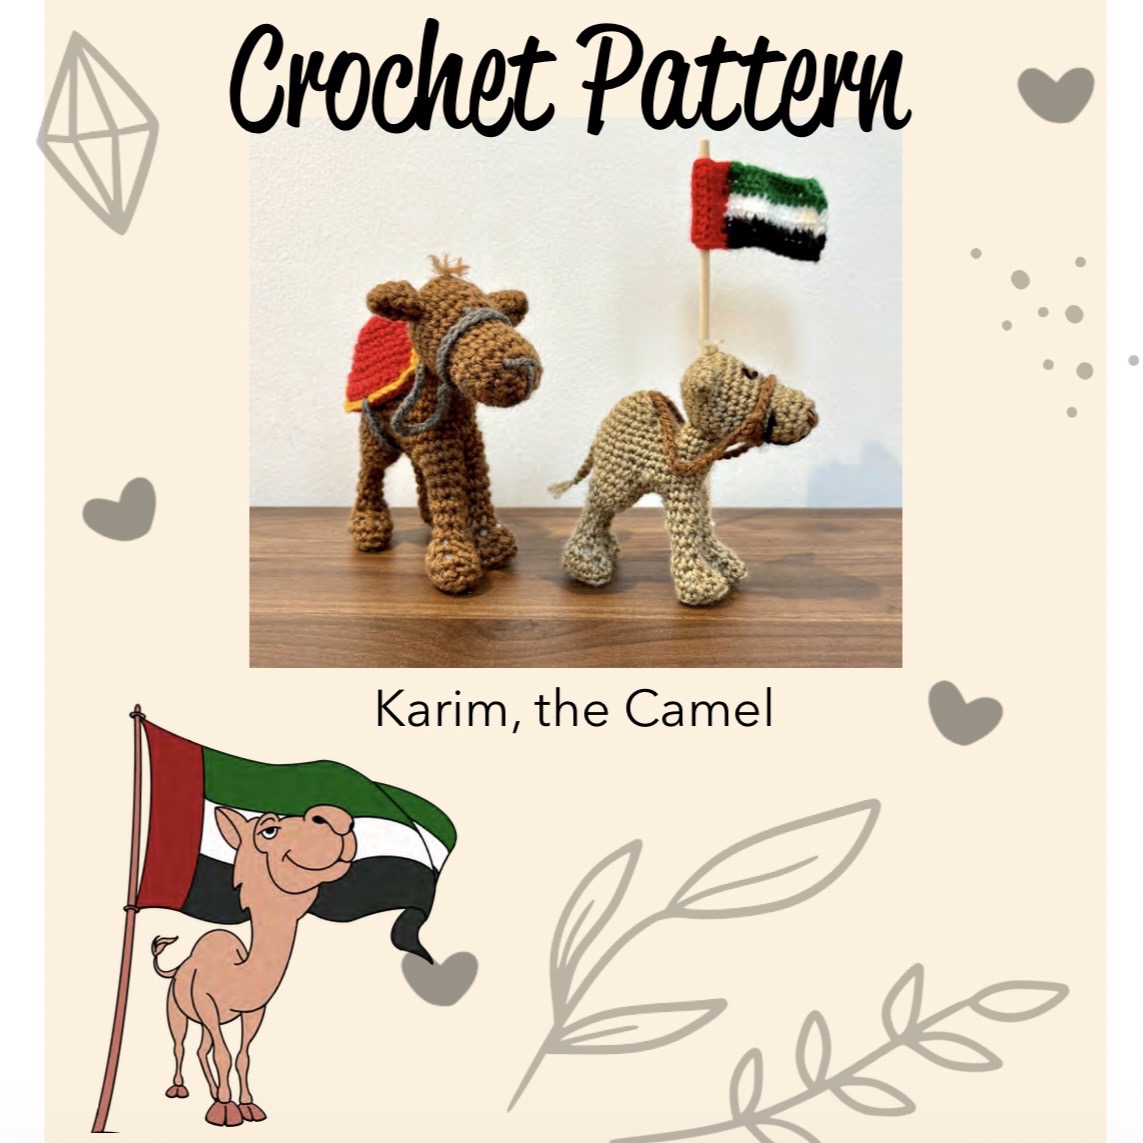 Crochet Karim, the Camel! 🐪 (link etsy-Shop in bio) #AmigurumiCamel
#CrochetCommunity
#CrochetEveryday
#CrochetLife
#CraftersGonnaCraft
#InstaCrochet
#FiberArtist
#CrochetAnimals
#AmigurumiPattern
#Yarnspirations
#CrochetCreative
#CrochetFun
#Crochetgram
#Furryflinn